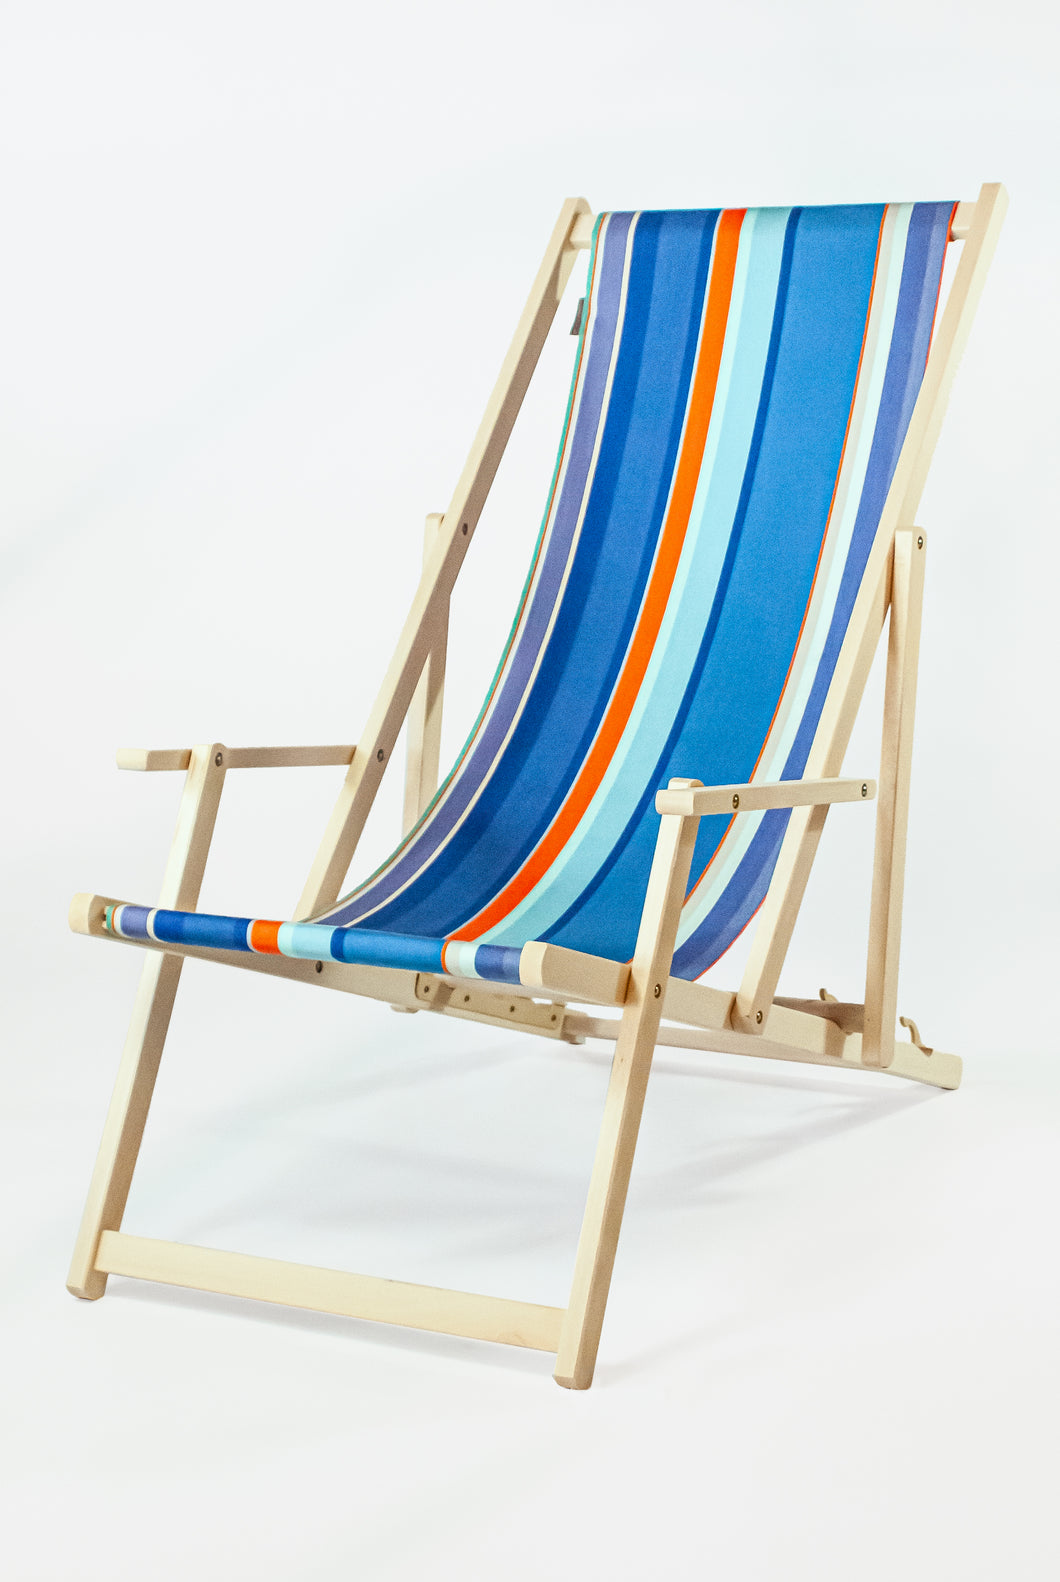 Feest blad Publiciteit strandstoel met armleuning en blauwe outdoor loper - kleurmeester.nl –  Kleurmeester.nl